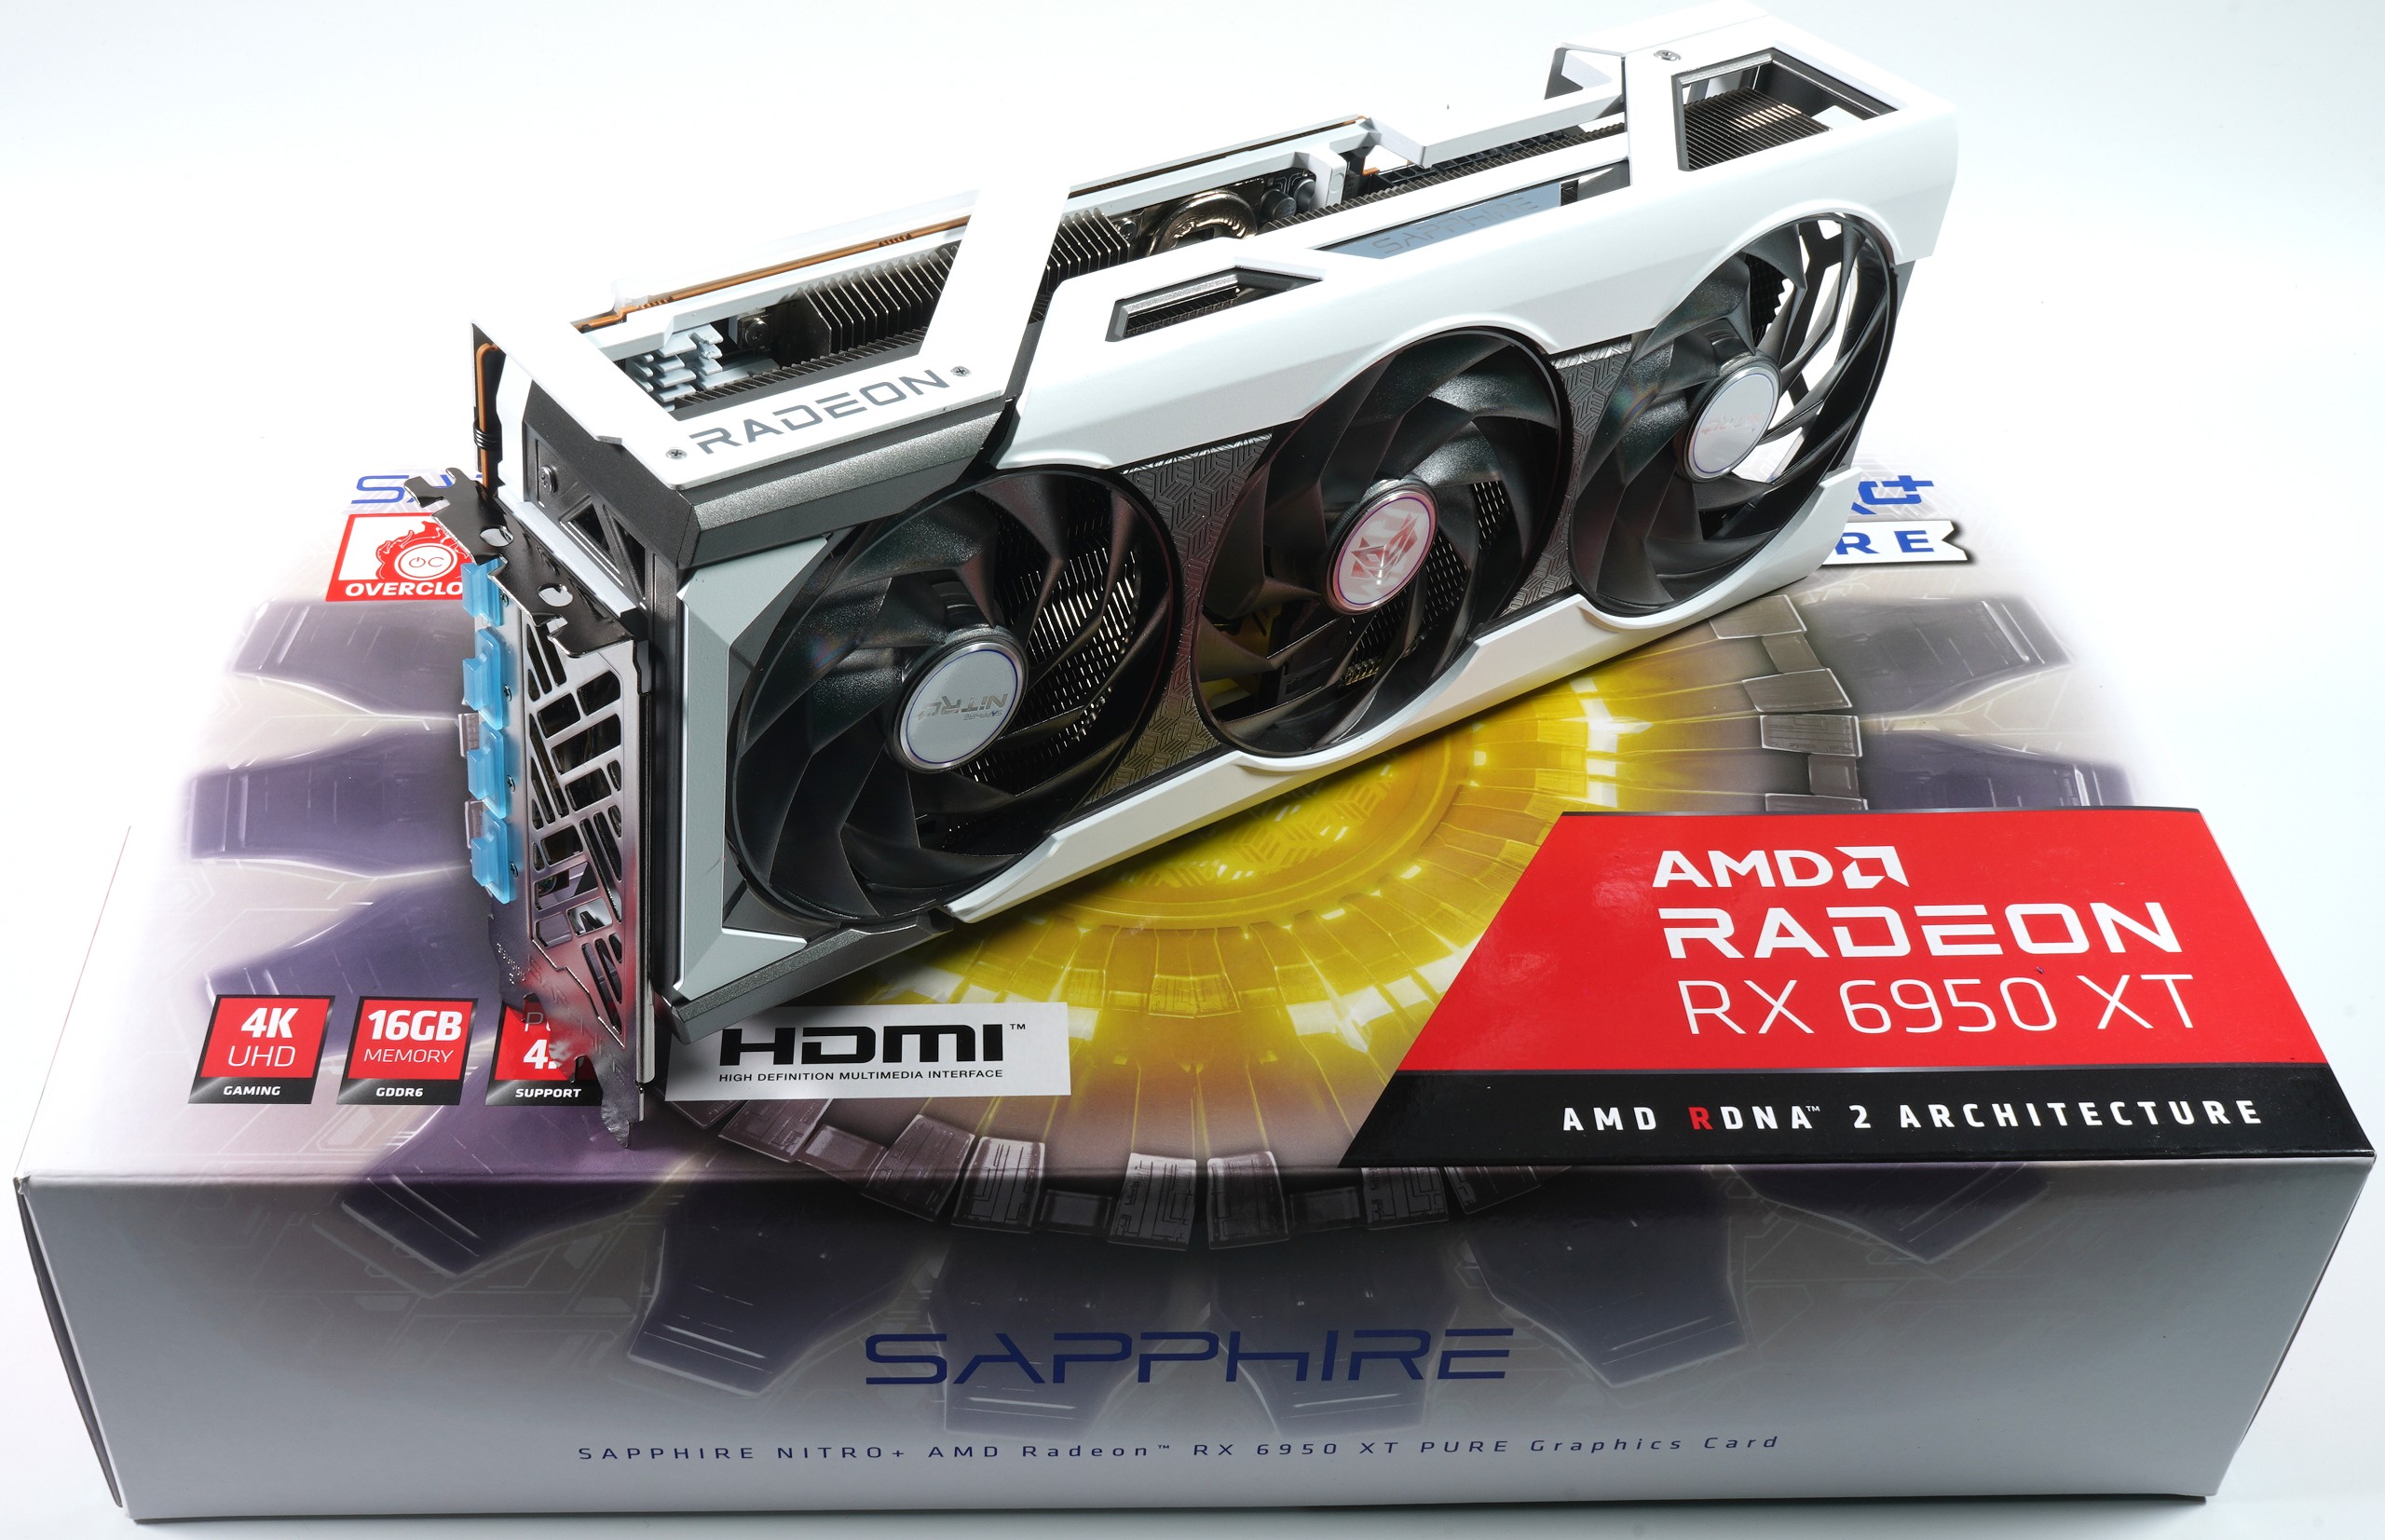 SAPPHIRE NITRO+ Radeon RX 6800 XT Gaming Graphics Card, AMD RDNA 2